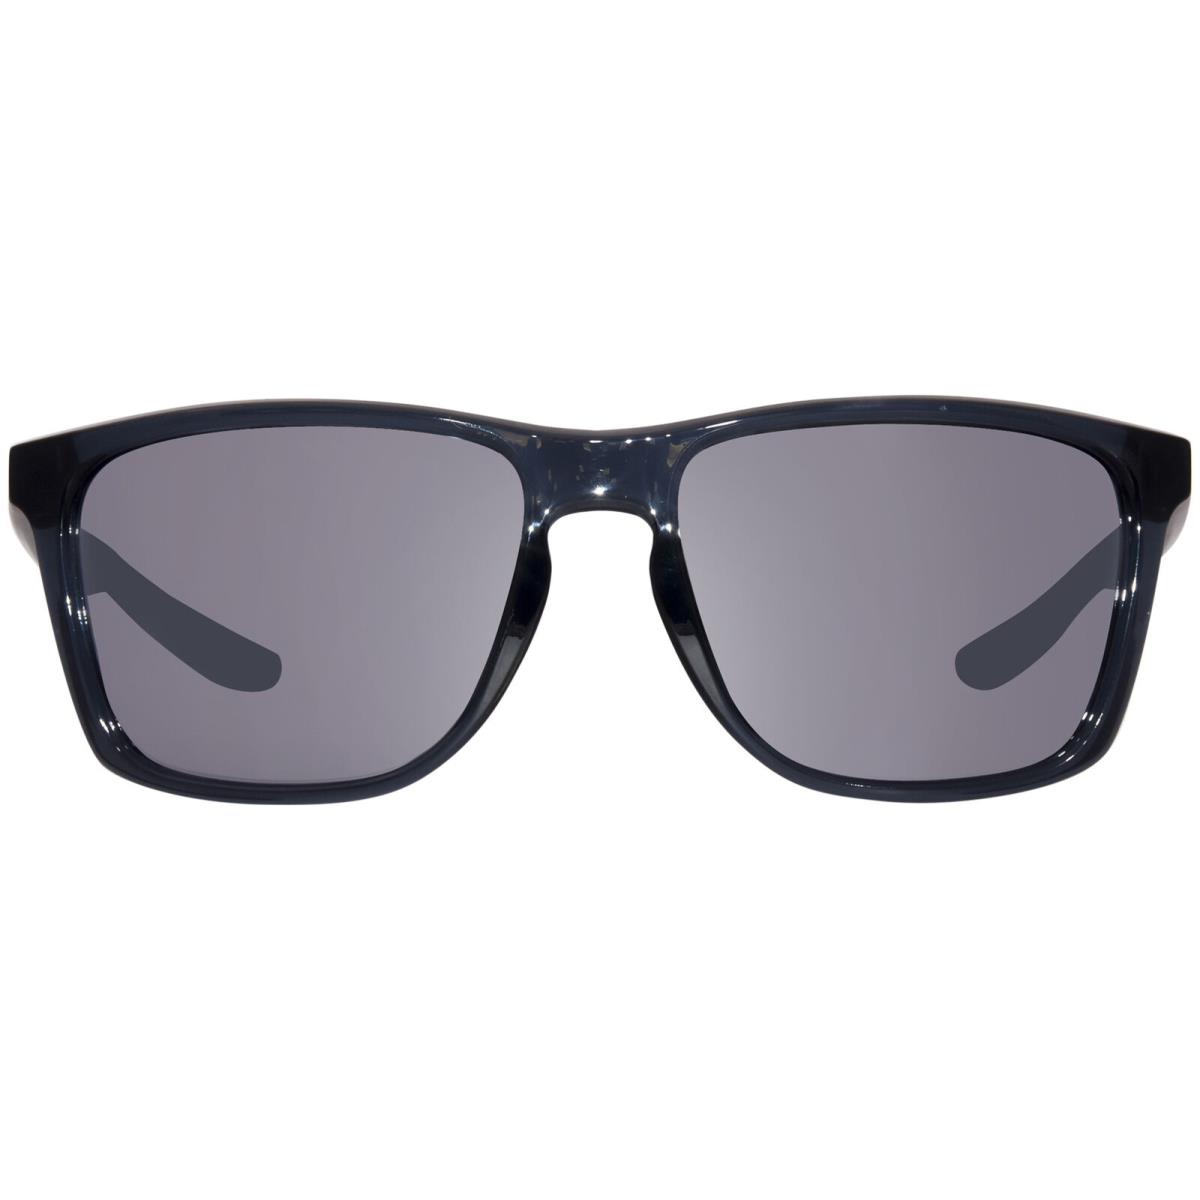 Nike Fortune FD1692 021 Sunglasses Dark Grey/silver Flash Square Shape 57mm